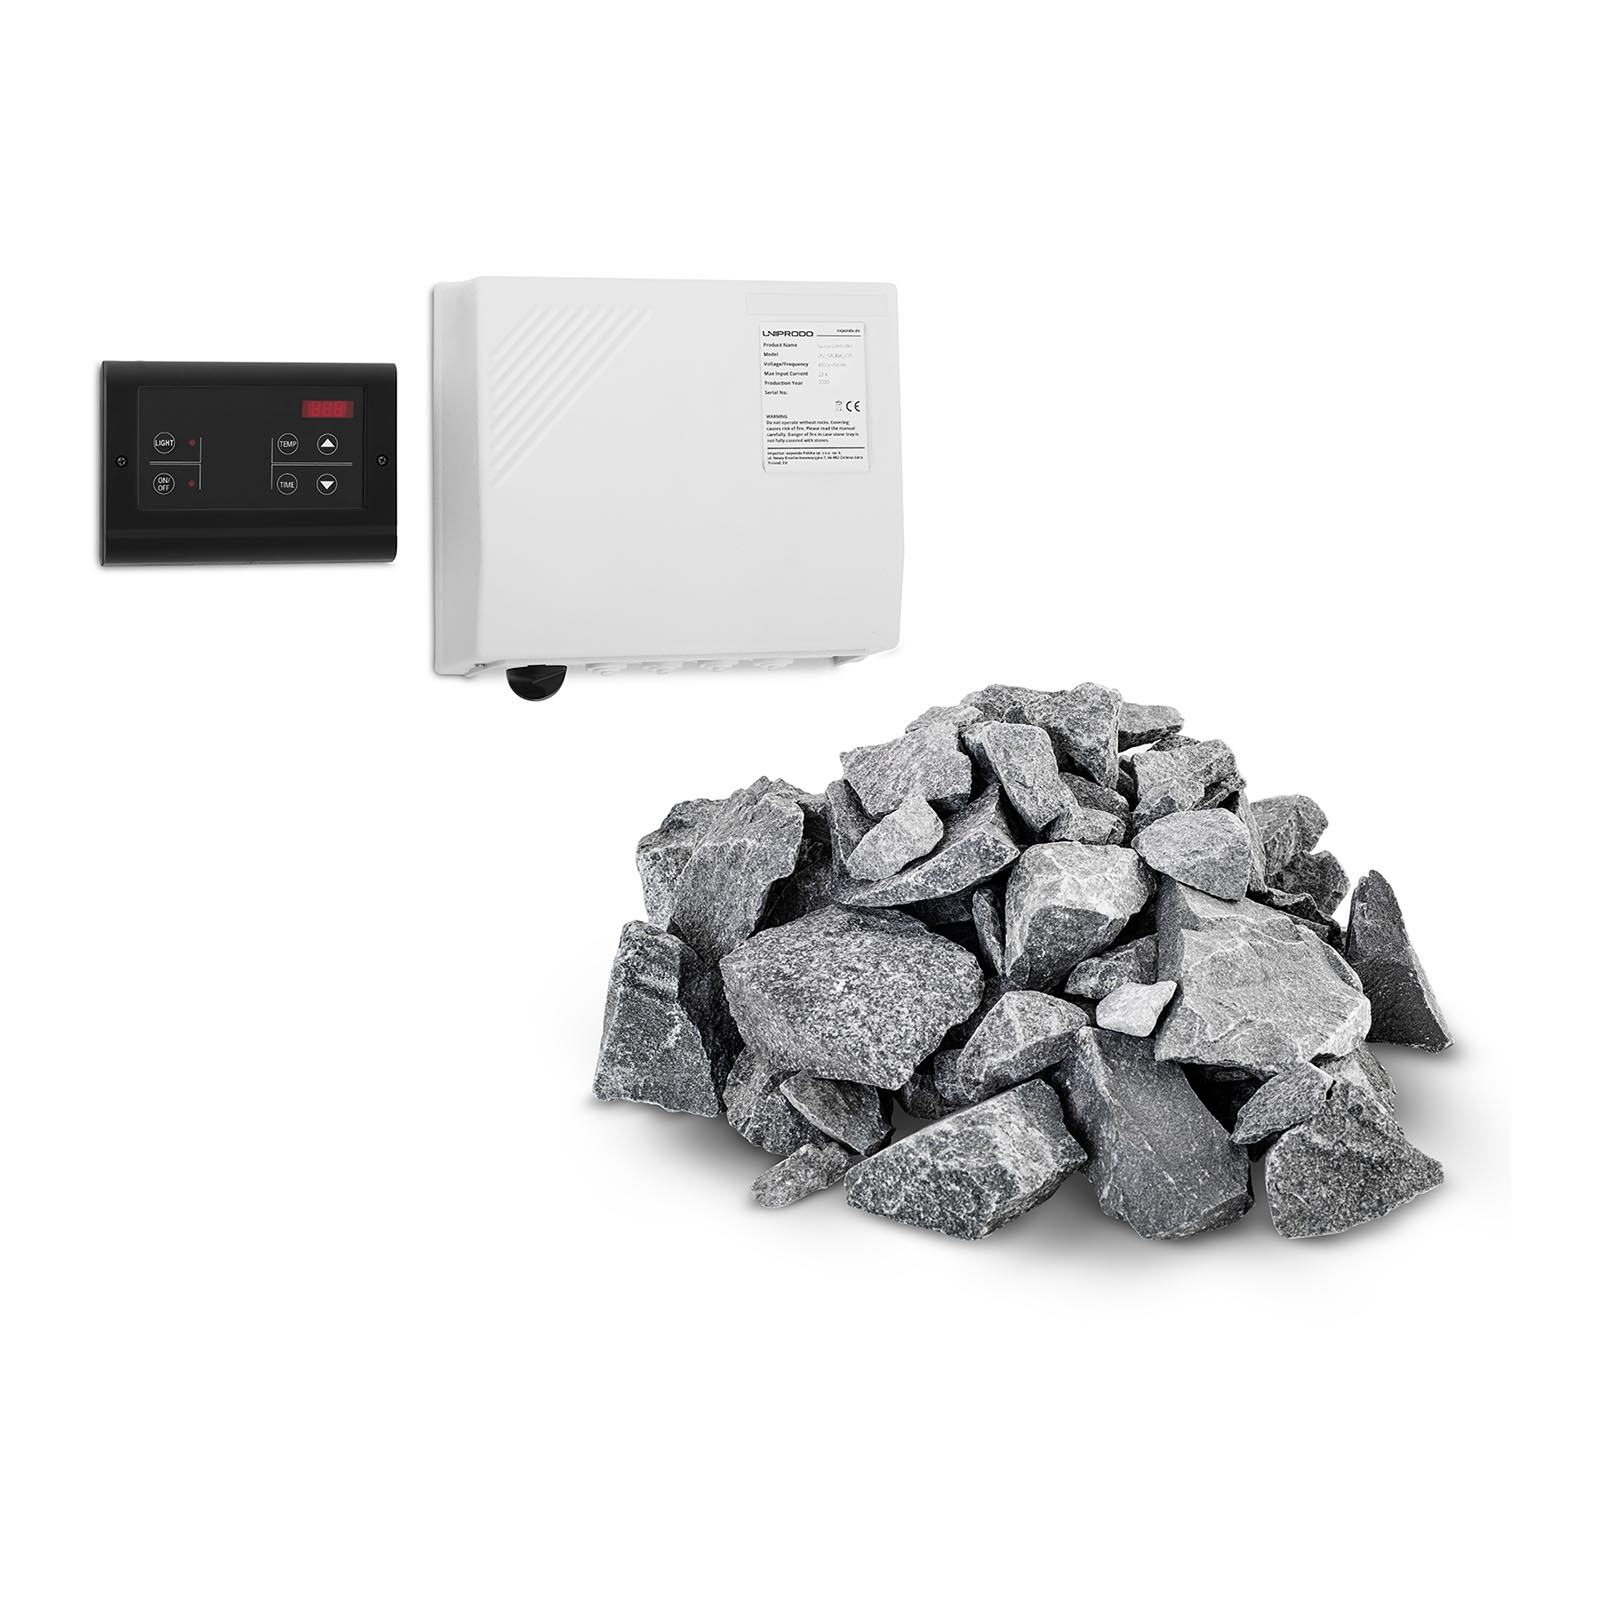 Kit Pedras para sauna - 20 kg + Painel de controlo para sauna - 400 V 3 N